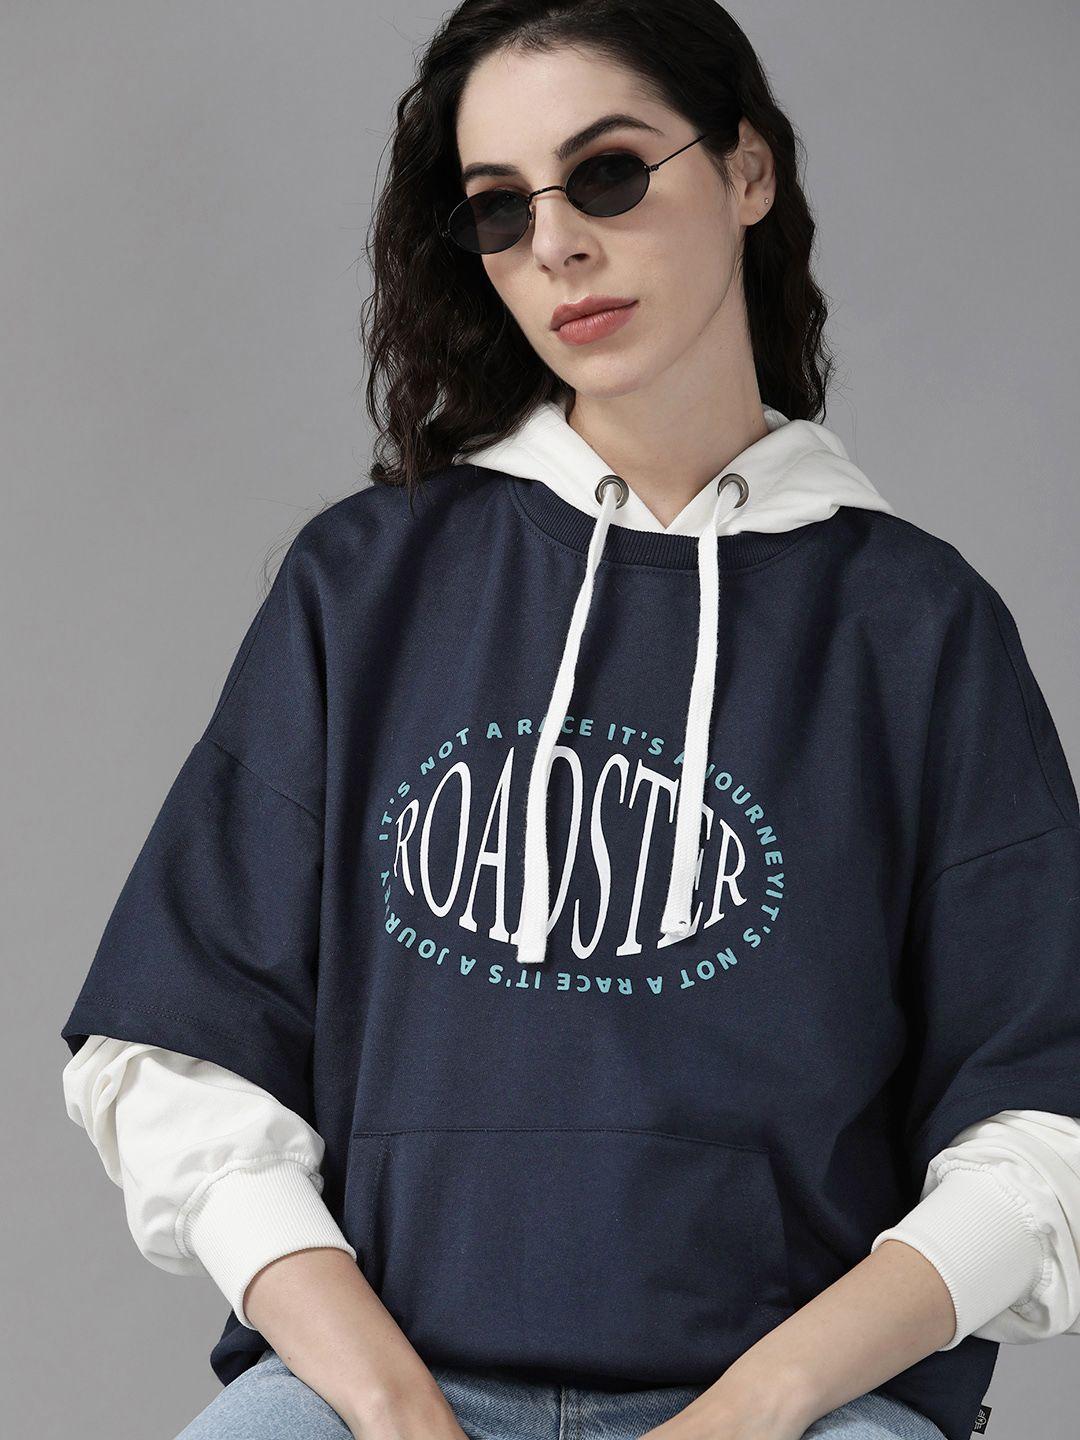 the roadster lifestyle co. women navy blue printed hooded sweatshirt